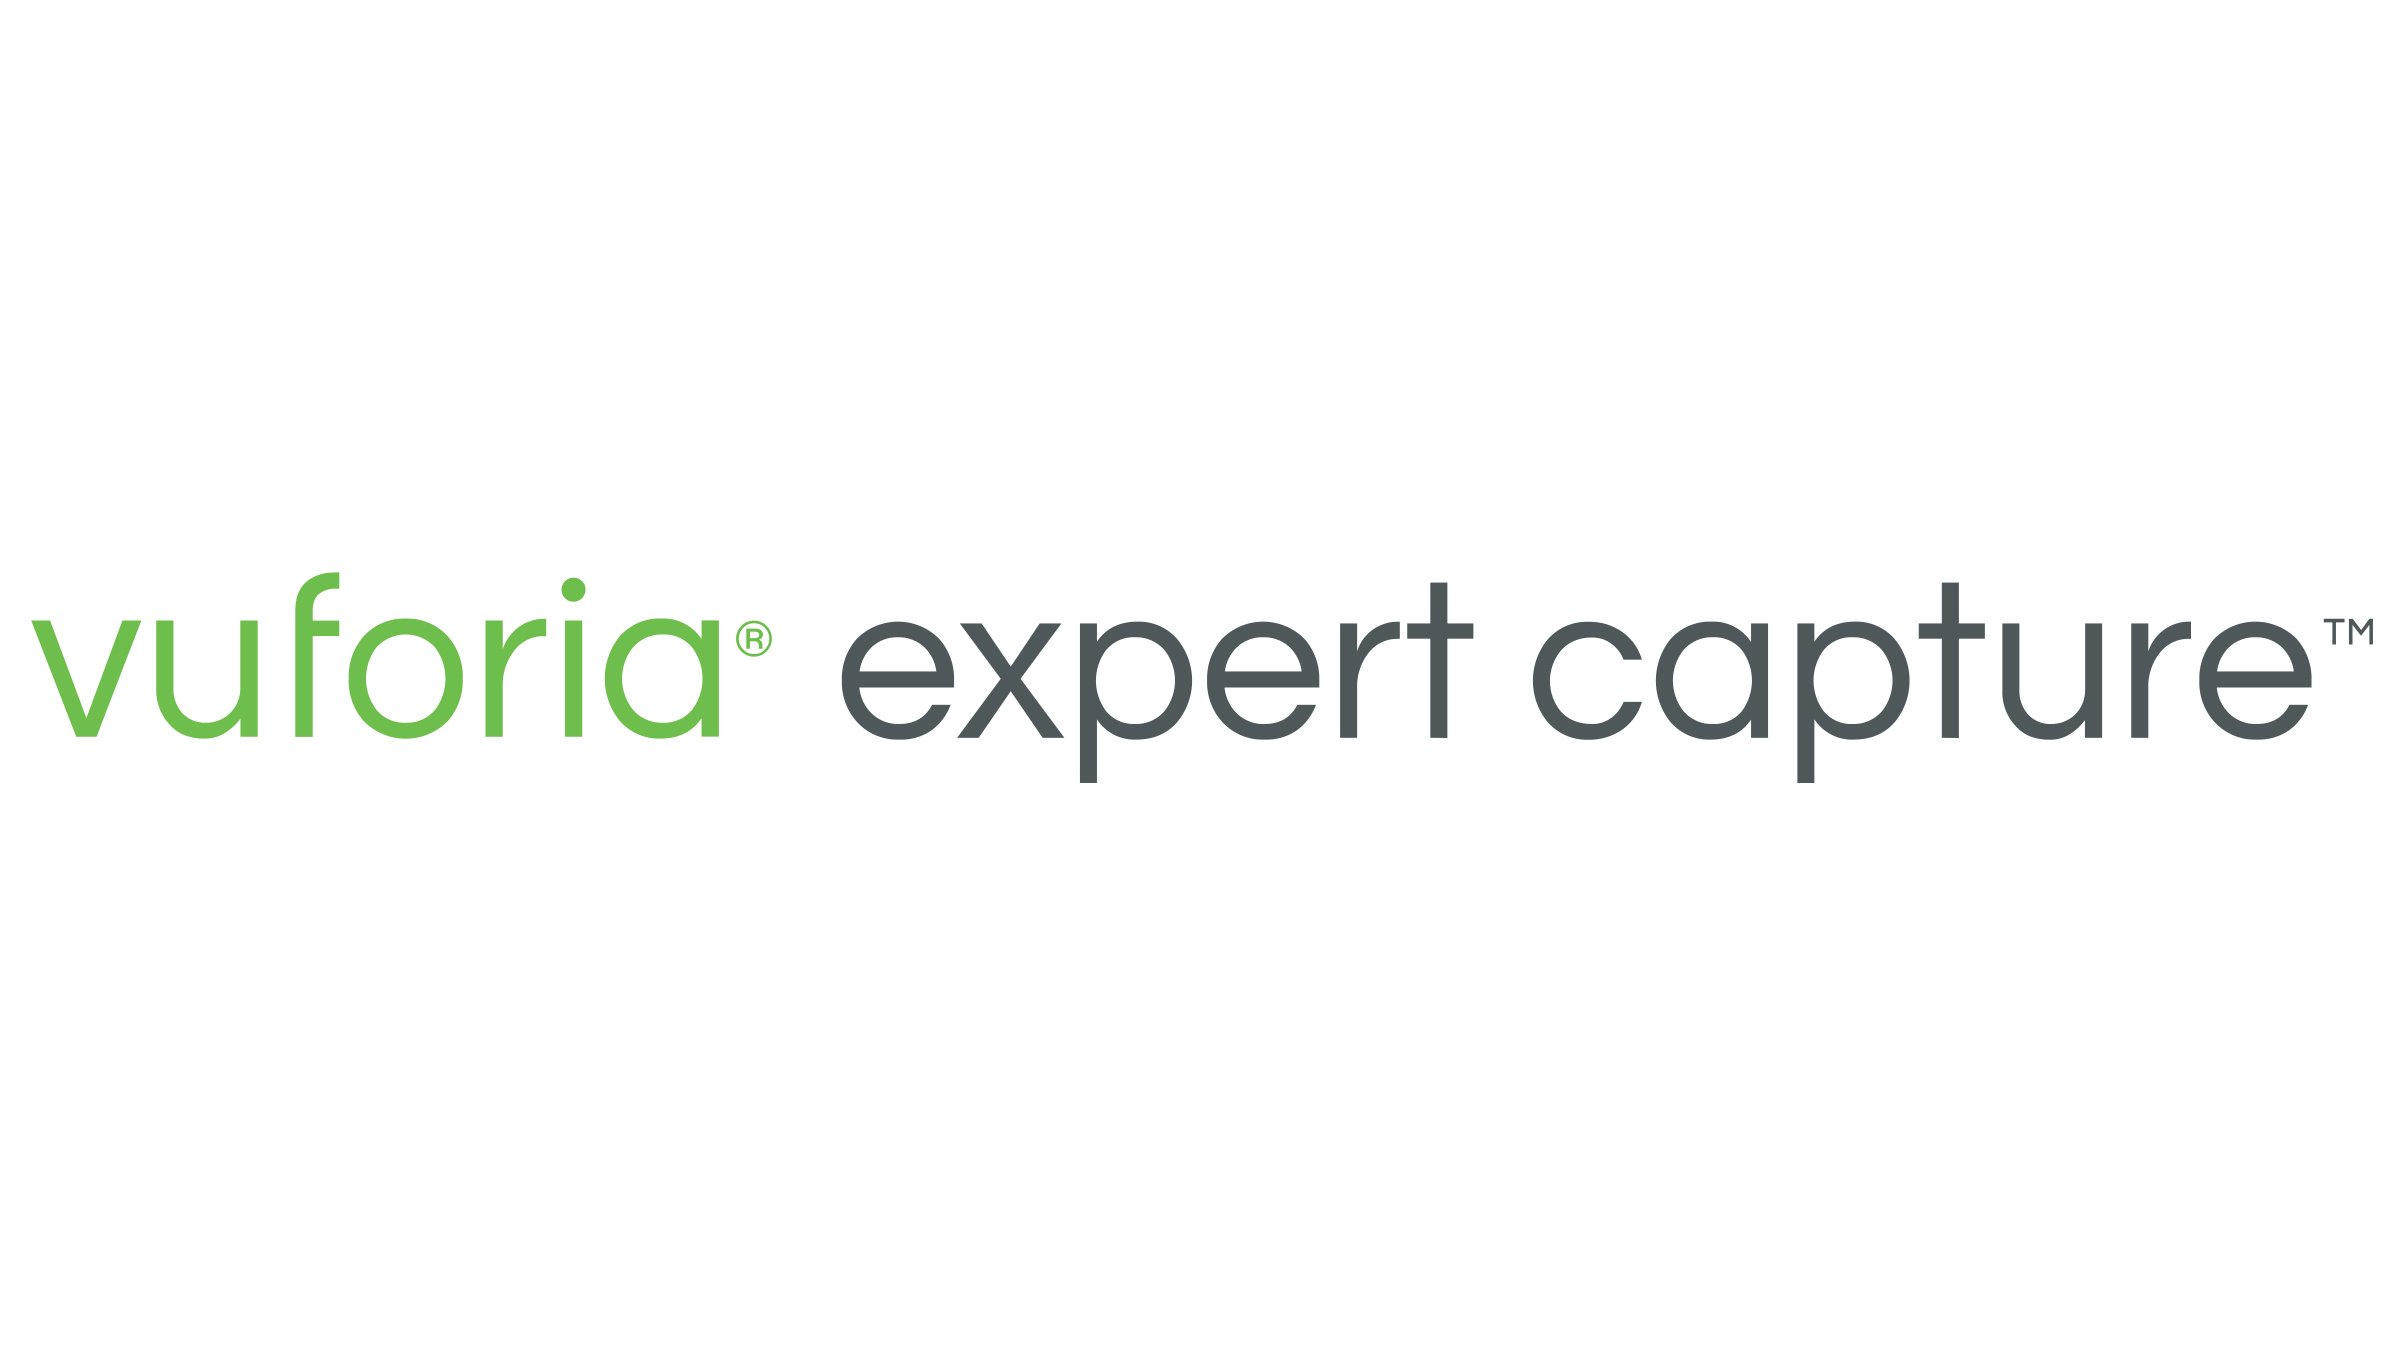 Green and grey PTC Vuforia Expert Capture logo